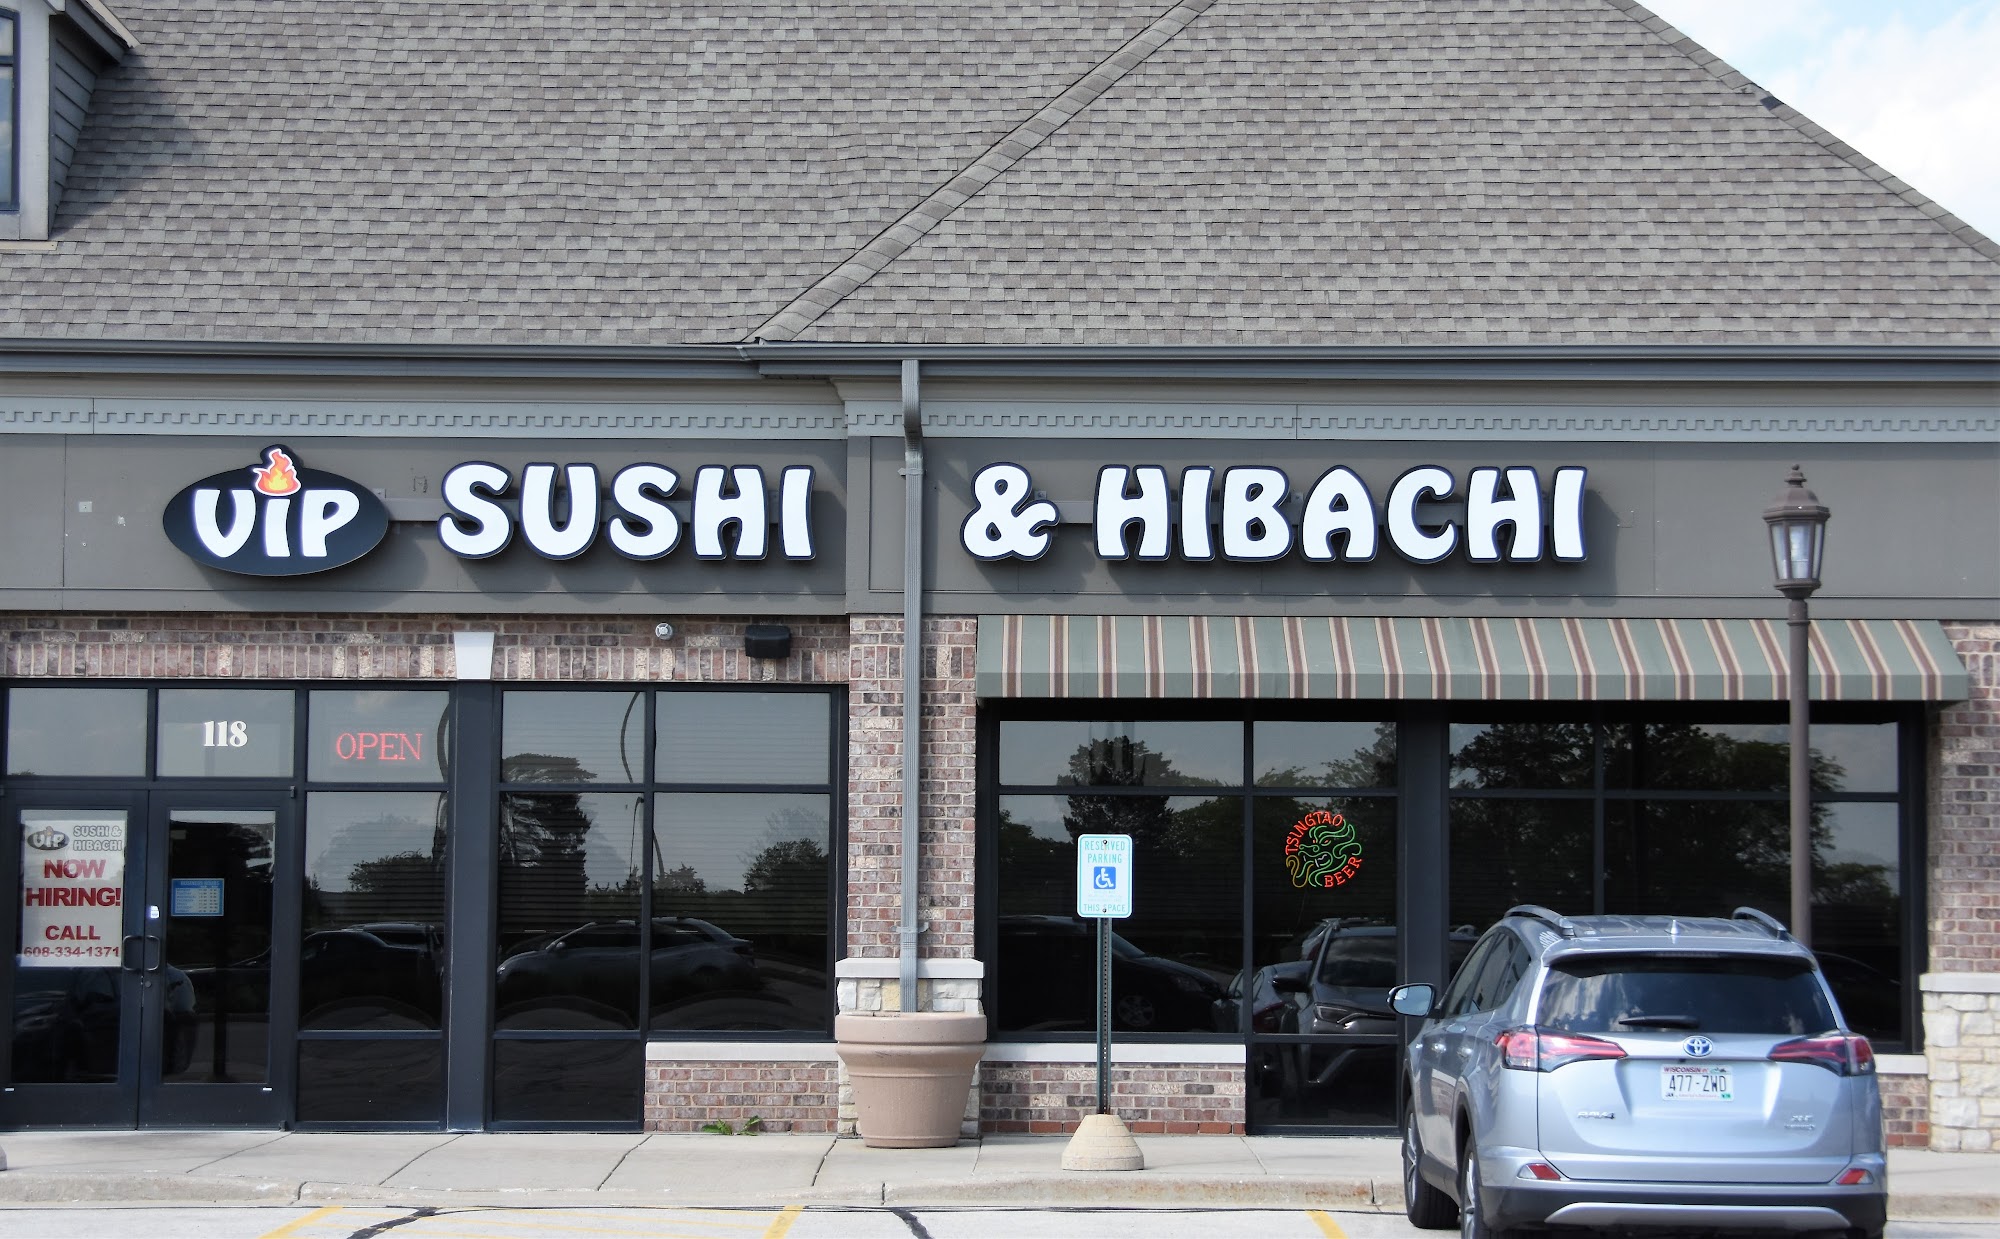 Vip Sushi & Hibachi